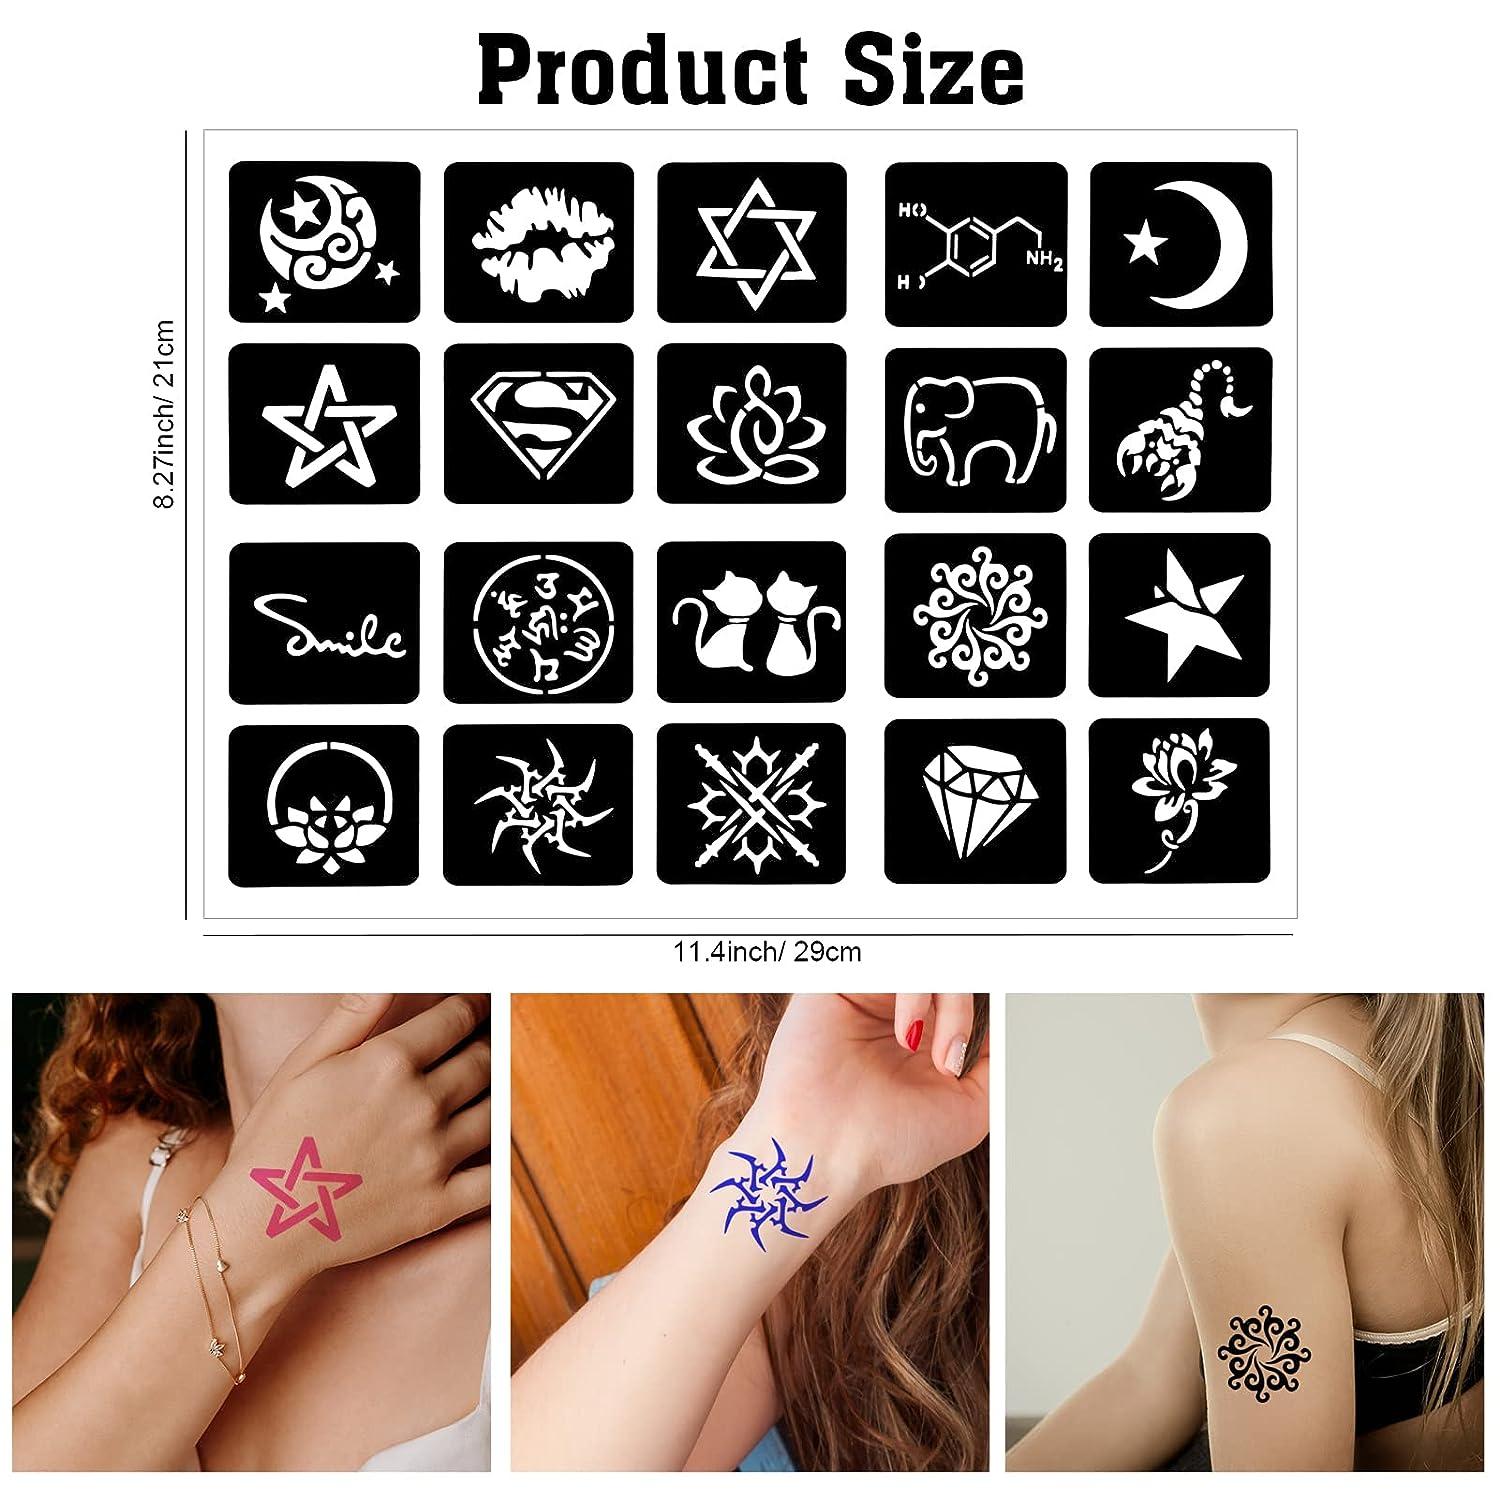 Qpout Tattoo Stencils For Kids Adults 16 Sheets Henna Tattoo